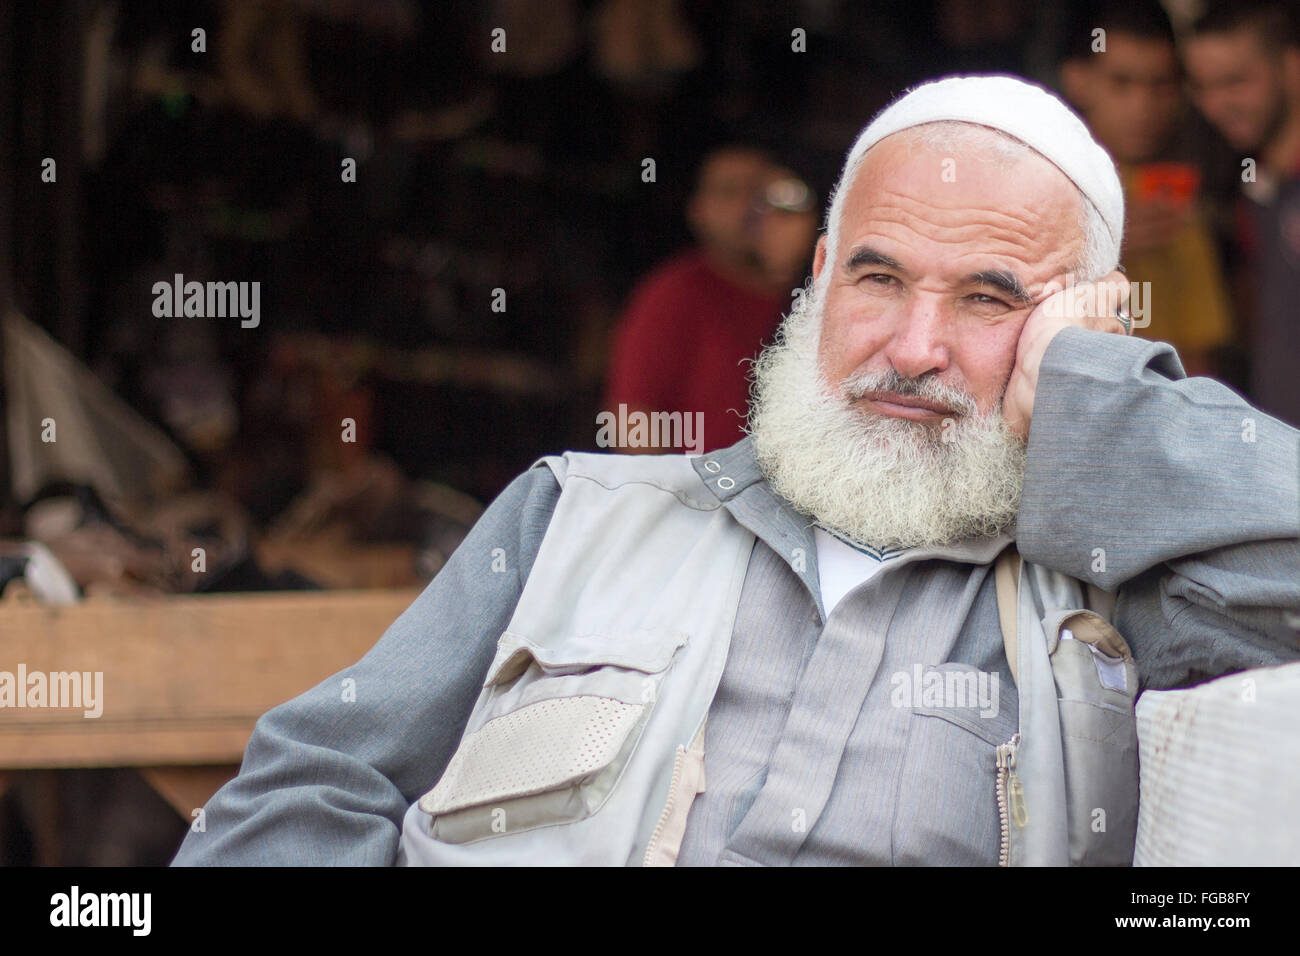 Thoughtful Muslim Man Looking Away While Sitting Stock Photo